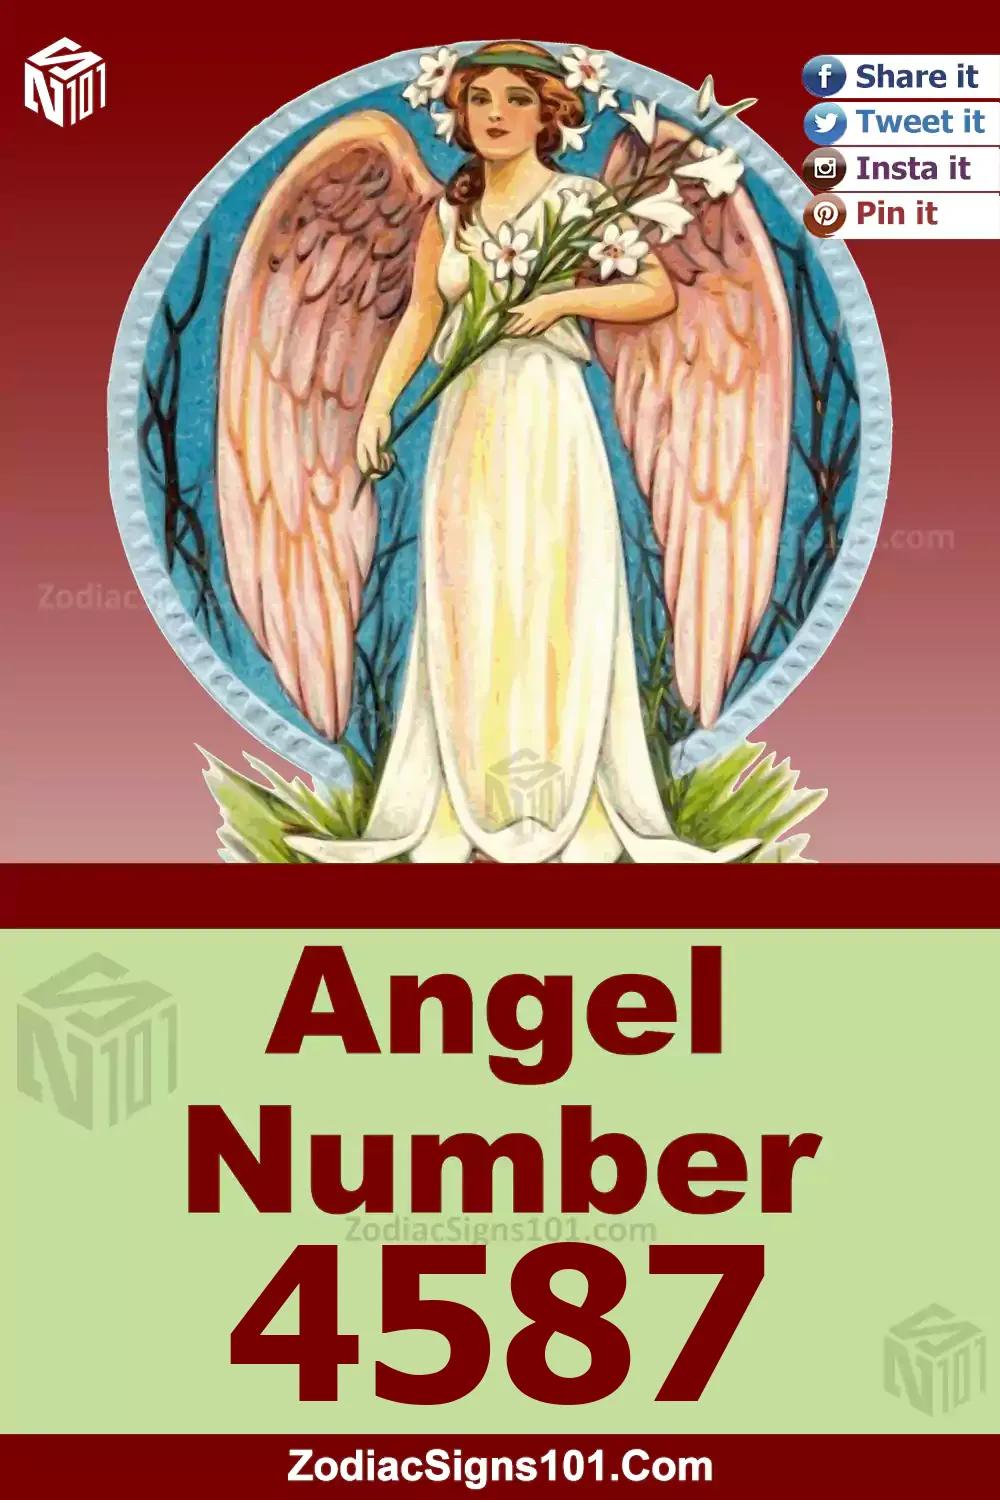 4587-Angel-Number-Meaning.jpg